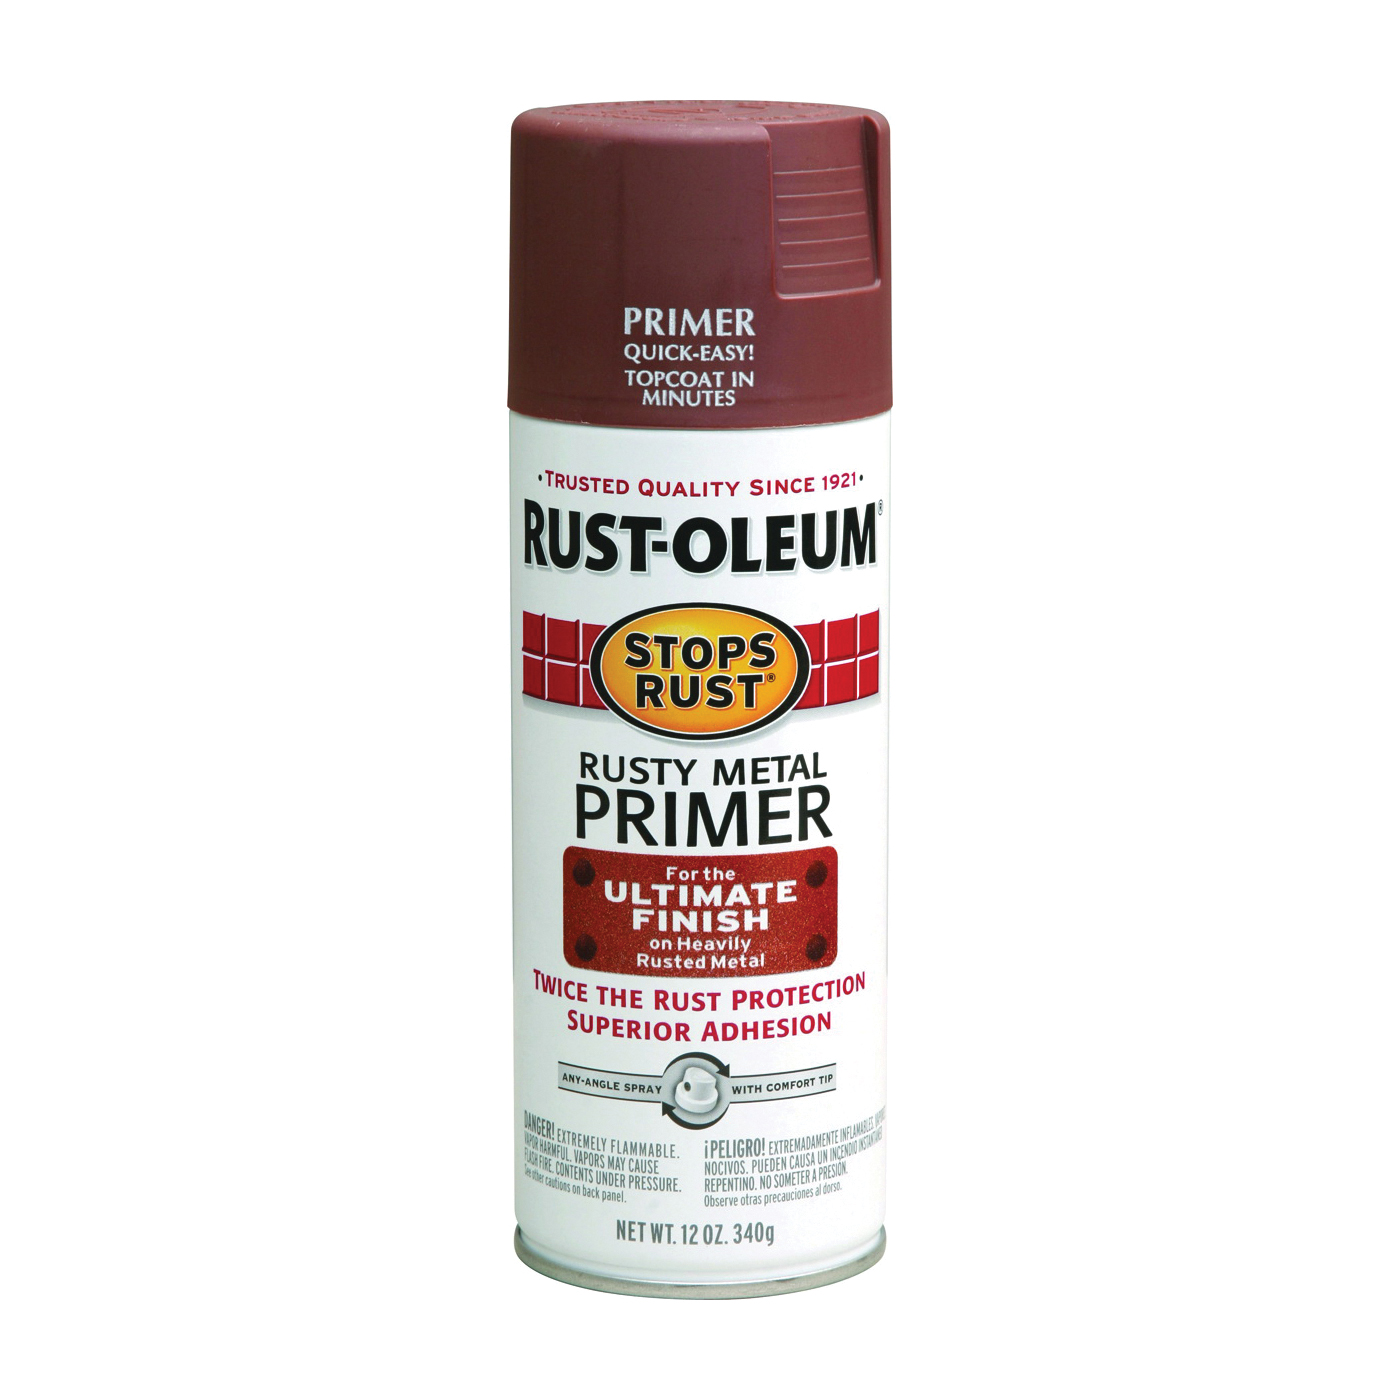 RUST-OLEUM STOPS RUST 7769830 Primer Spray, Rusty Metal, Flat/Matte, 12 oz - 1